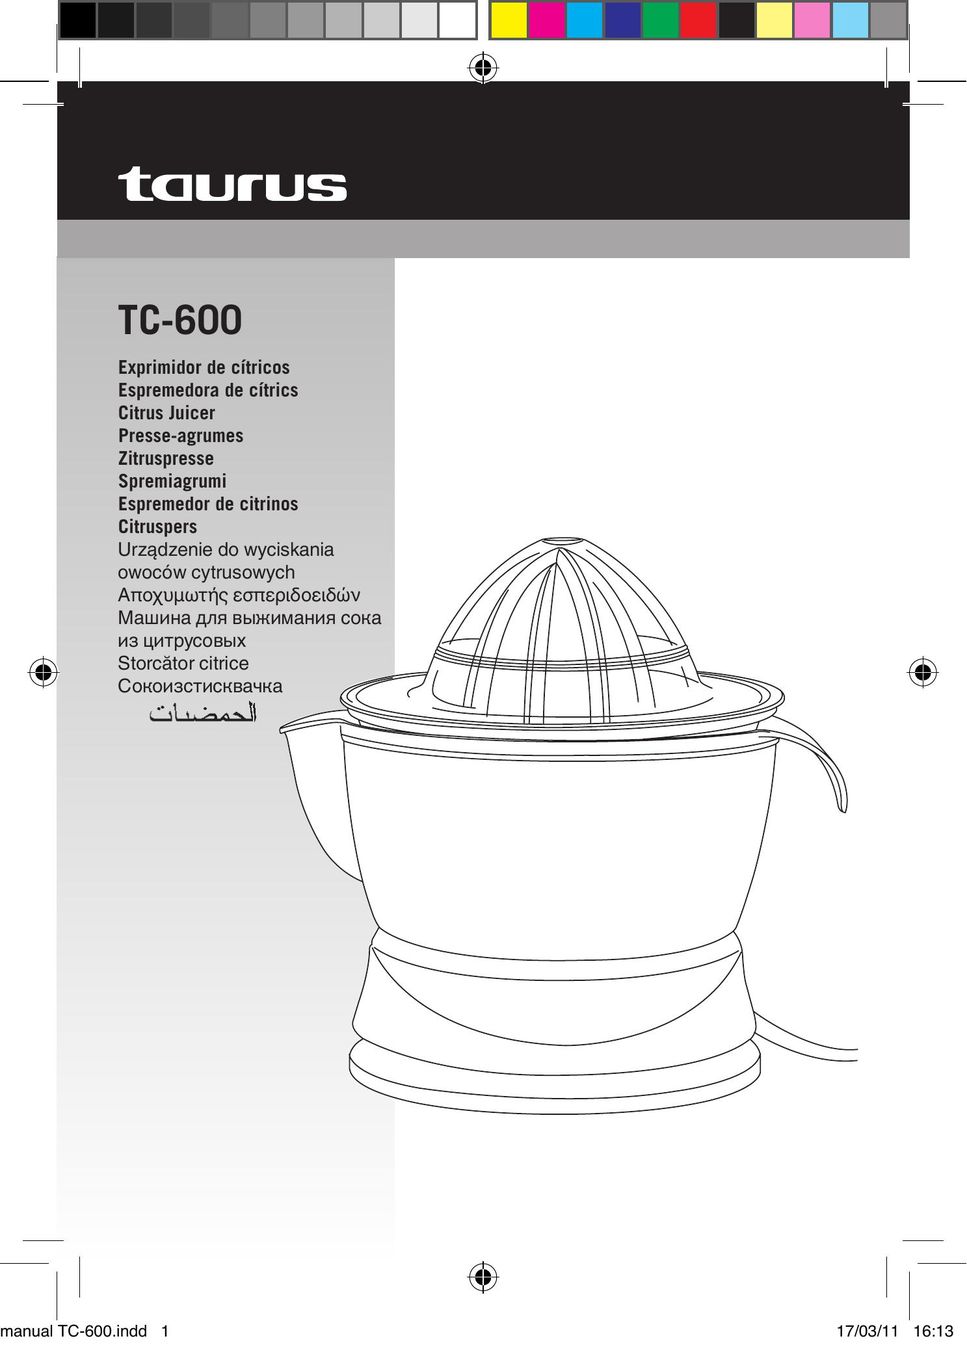 Taurus Group TC-600 Juicer User Manual